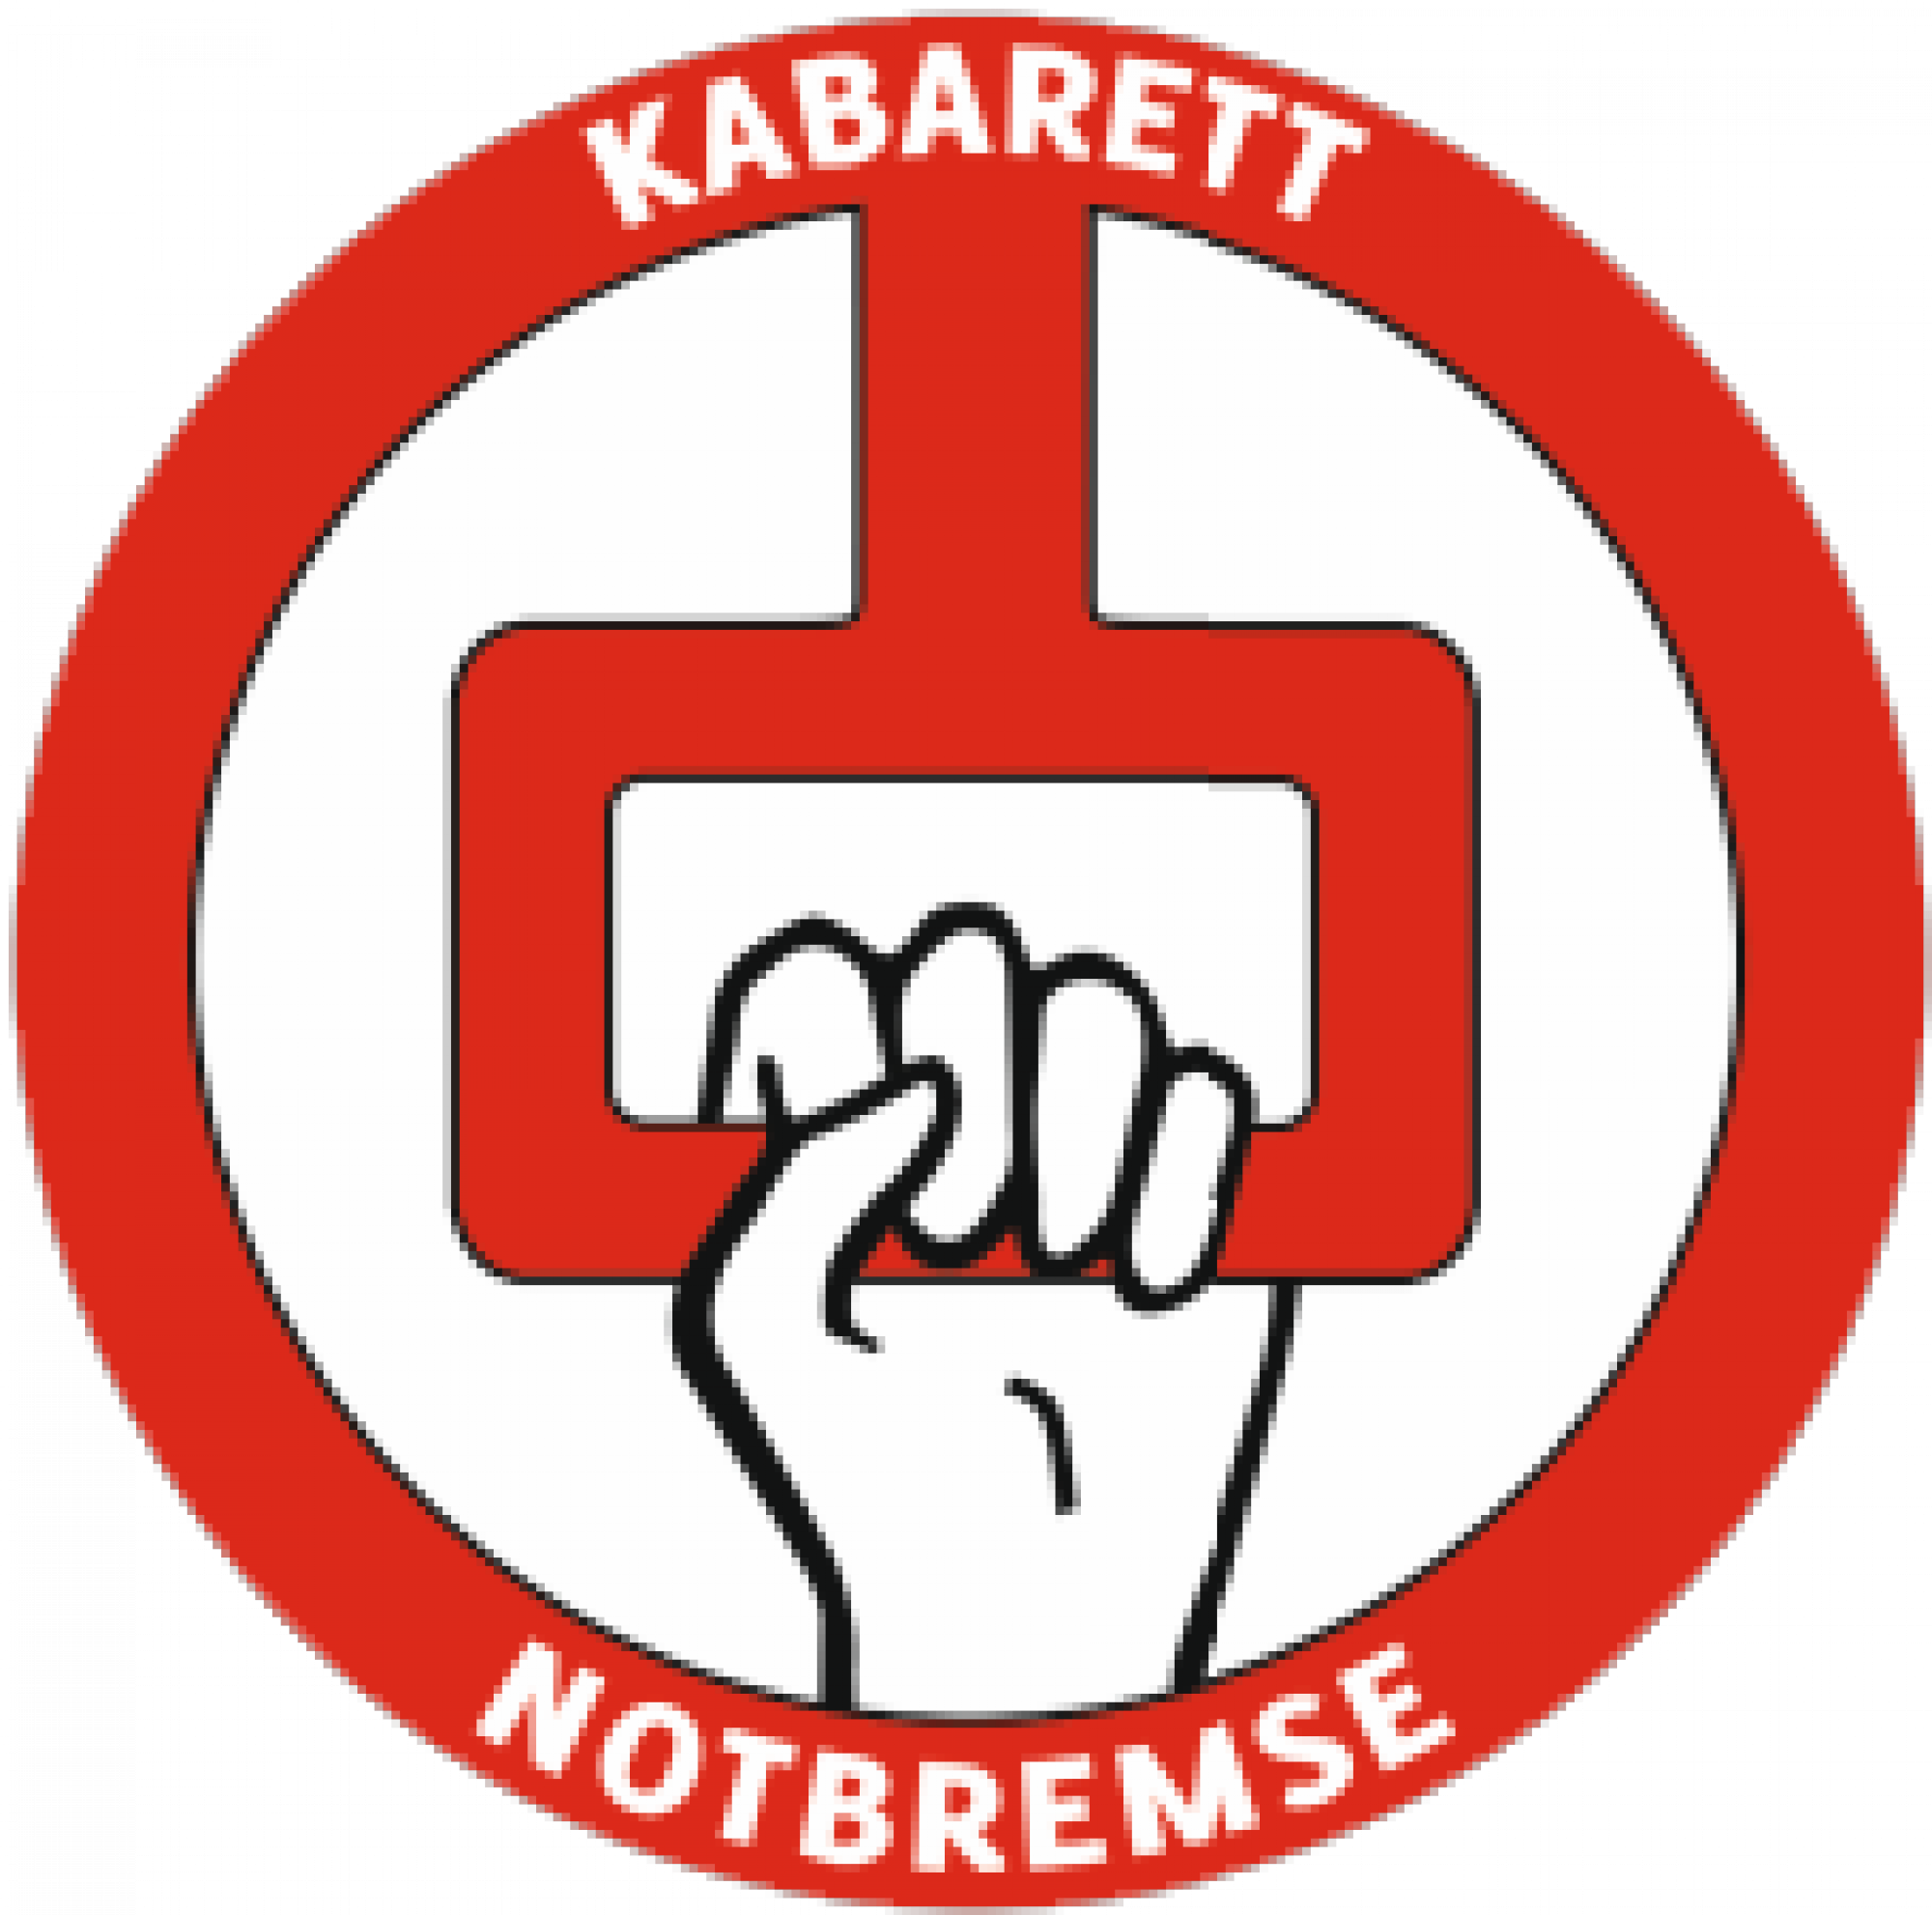 cropped logo kabarett notbremse